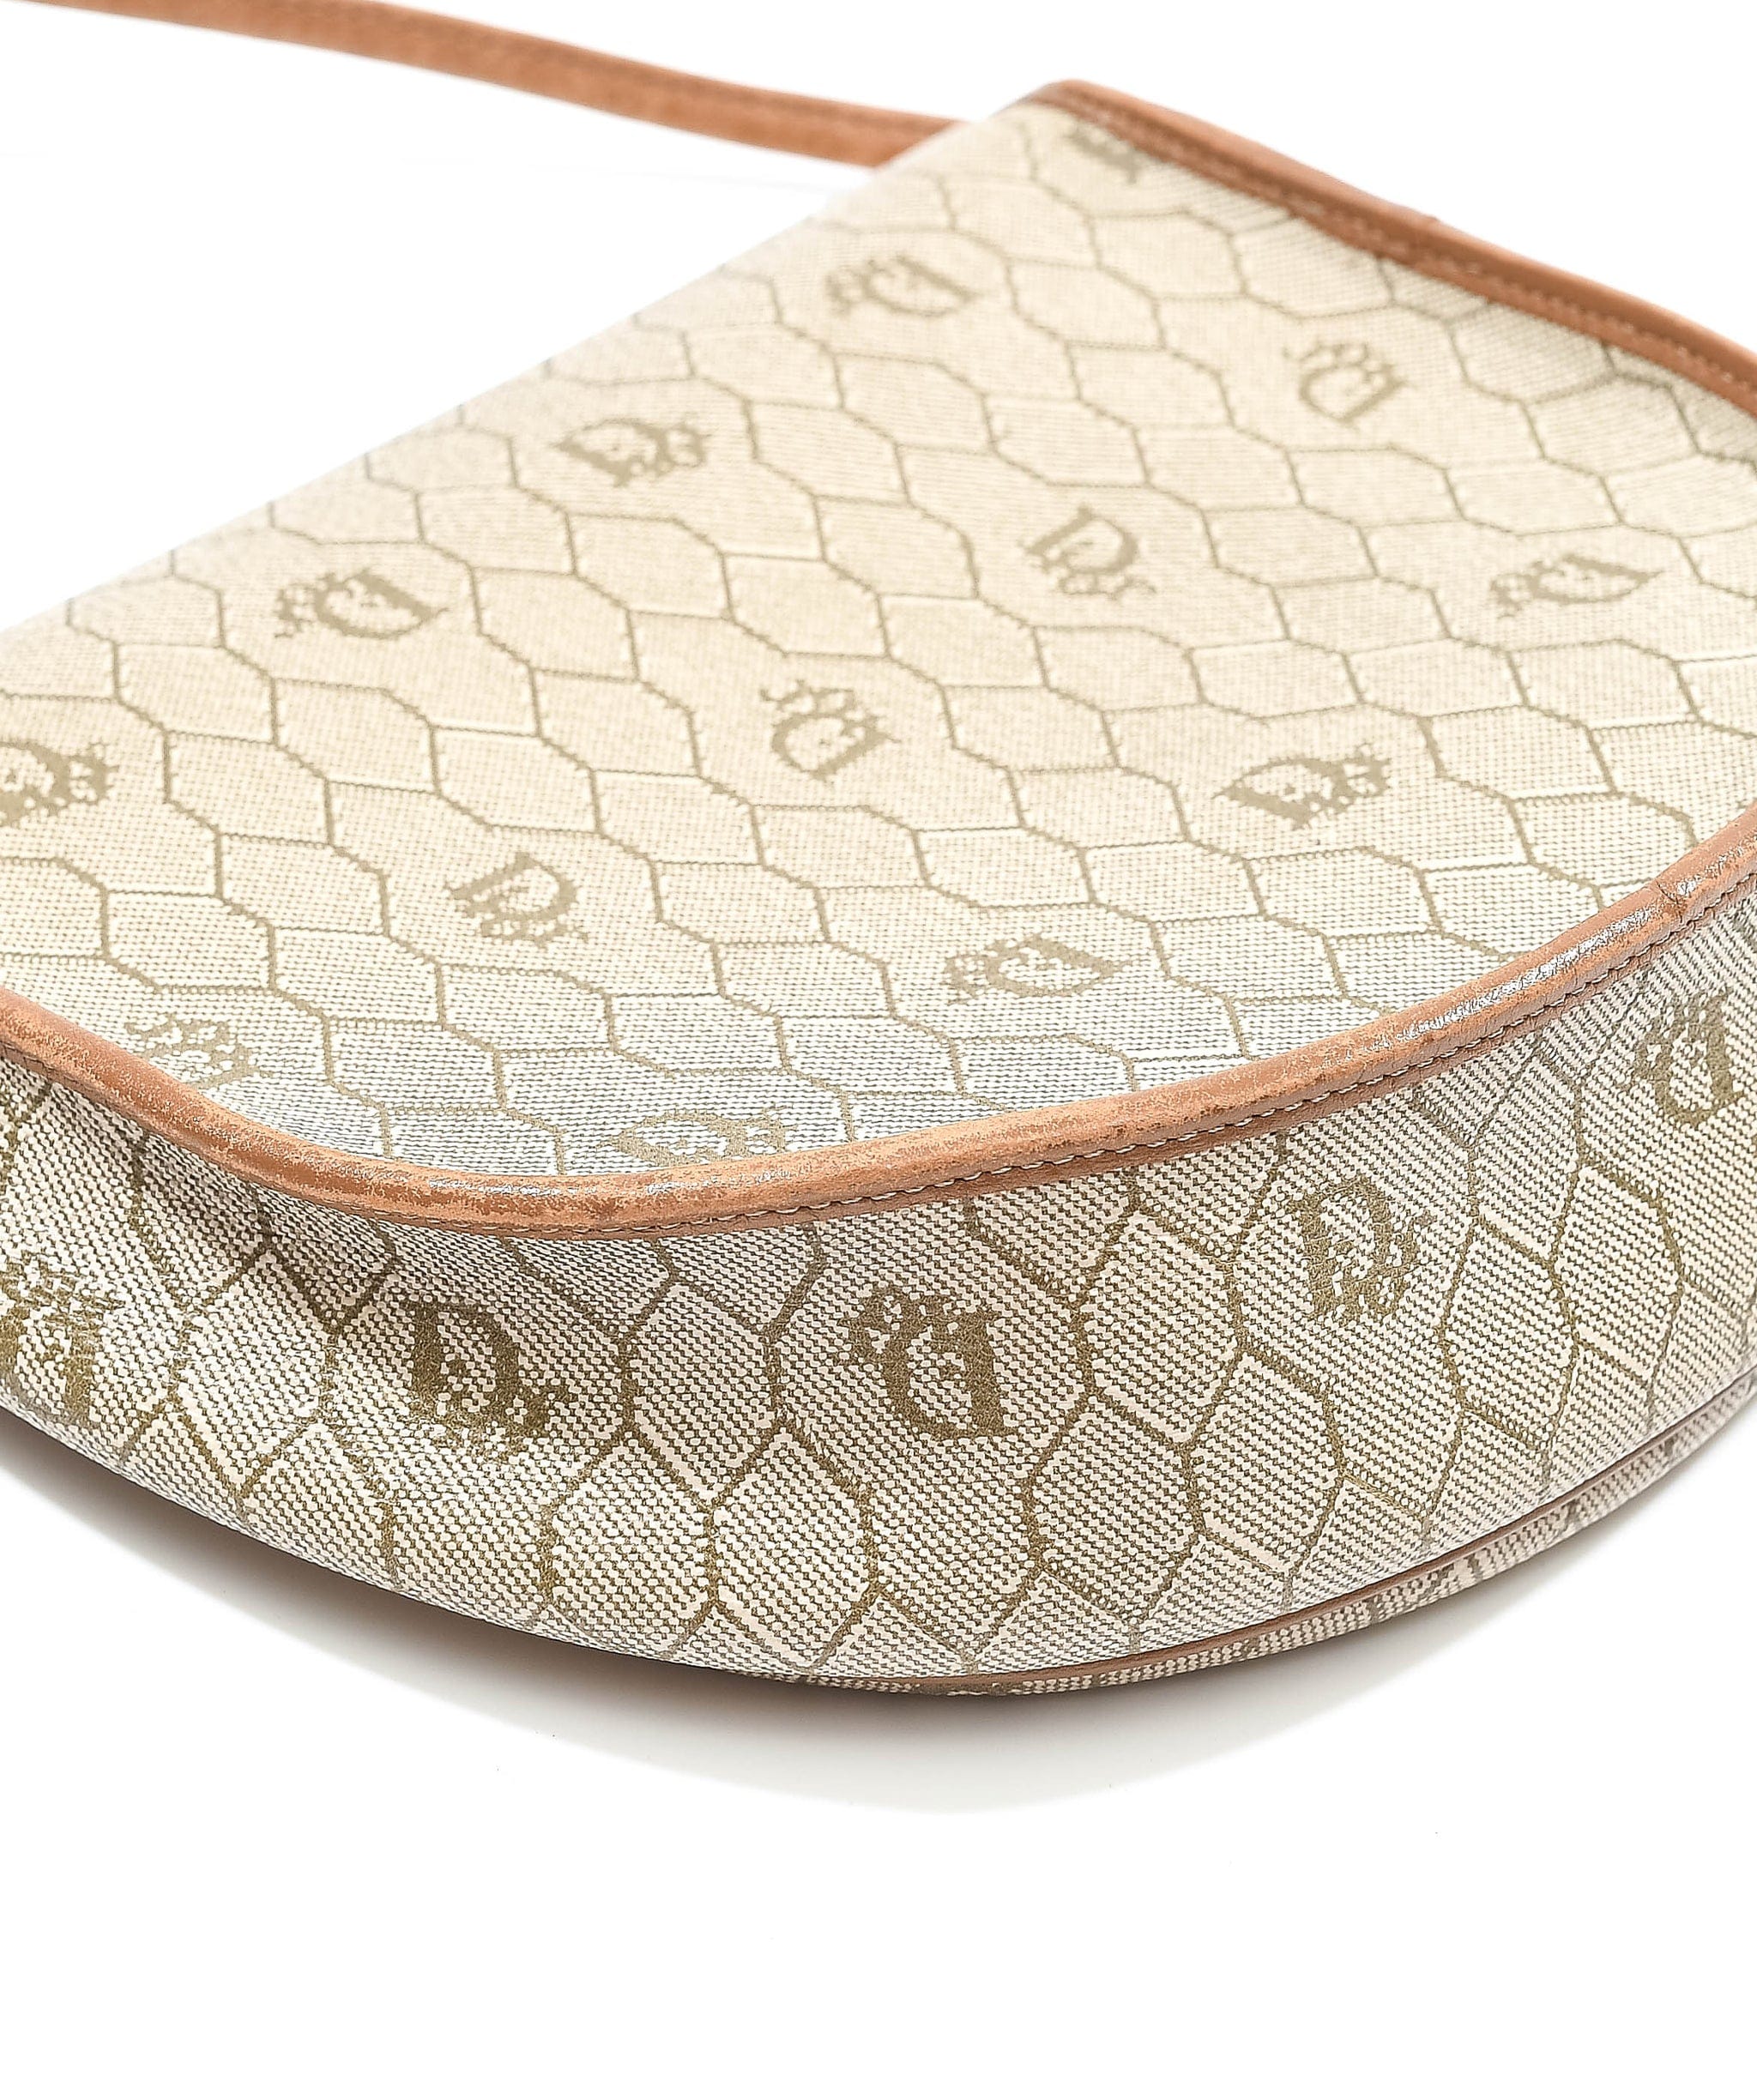 Christian Dior Dior honeycomb Sling bag - AWL3299